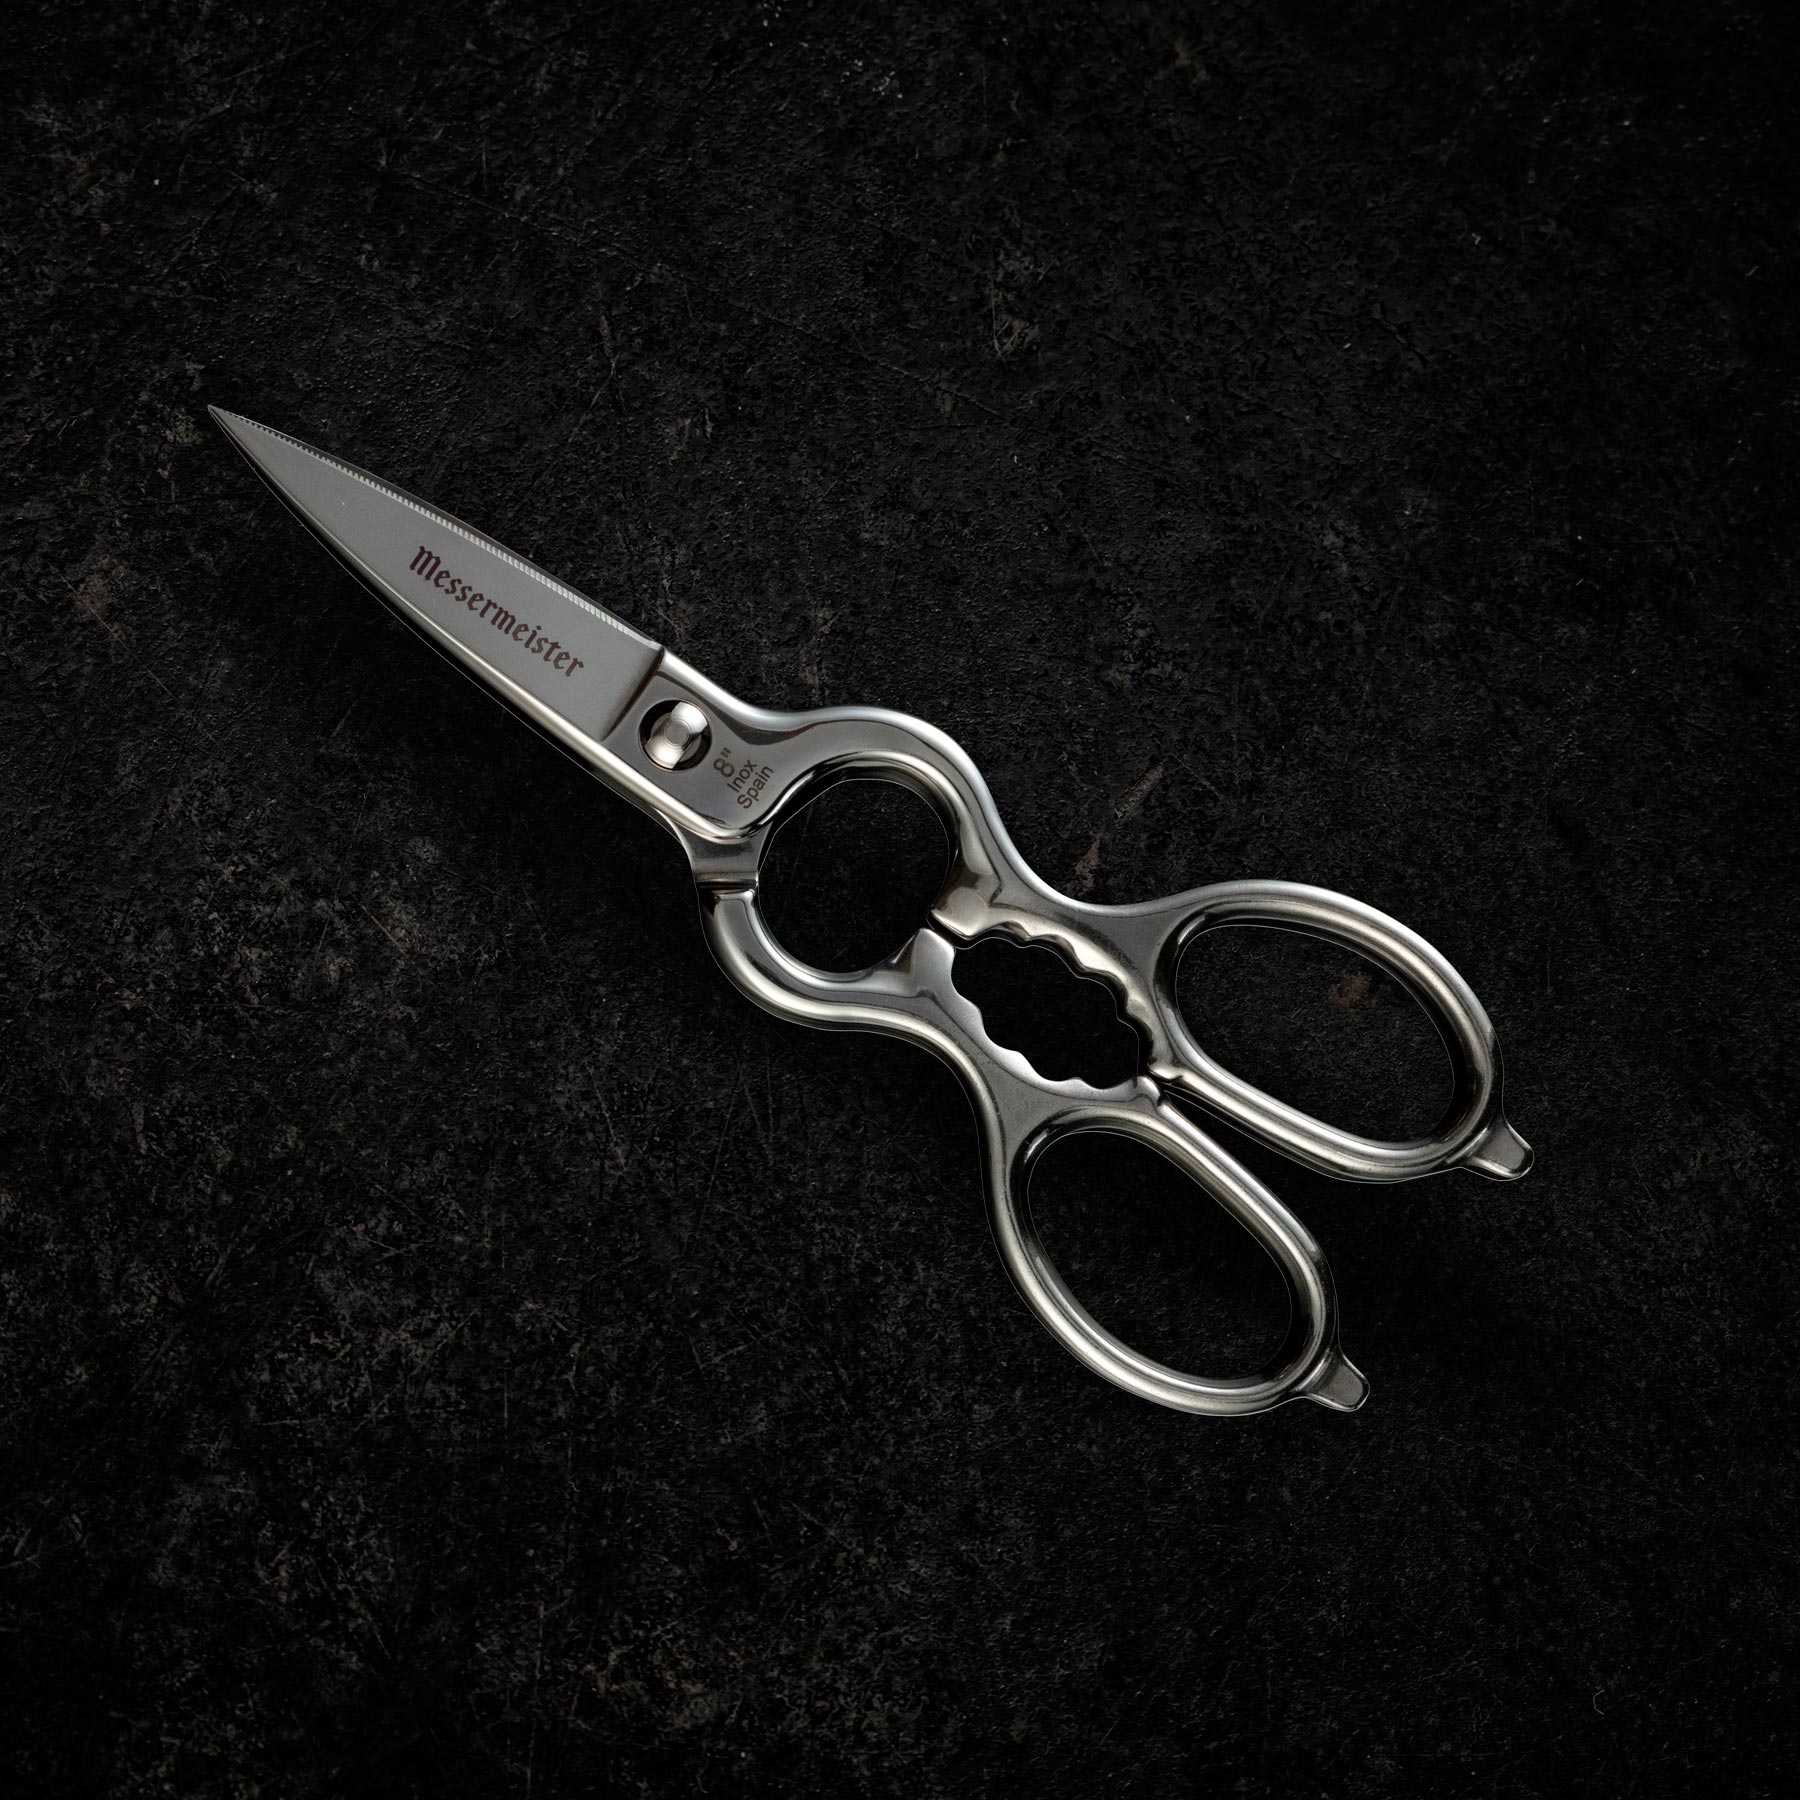 Forged Come Apart Kitchen Scissors/Shears|Gunter Wilhelm